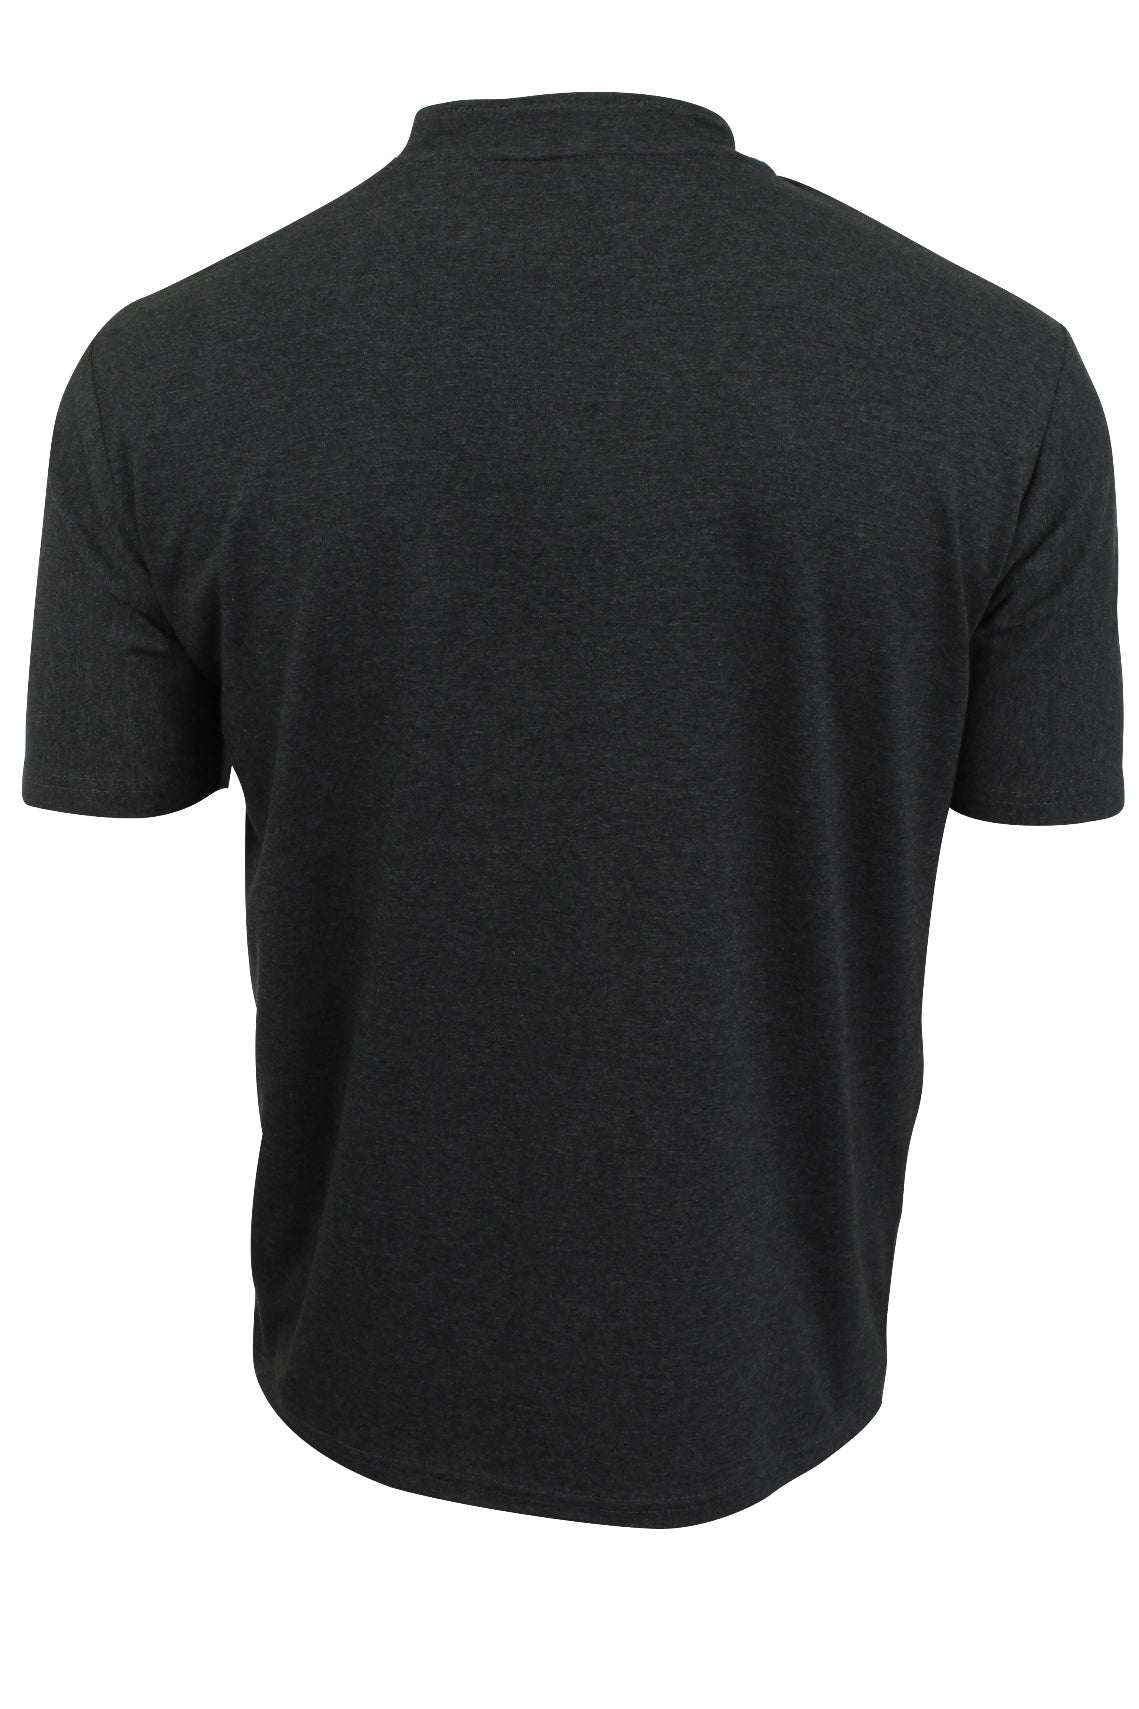 Mens Grandad T-Shirt by 'Xact' Short Sleeved (Charcoal)-3